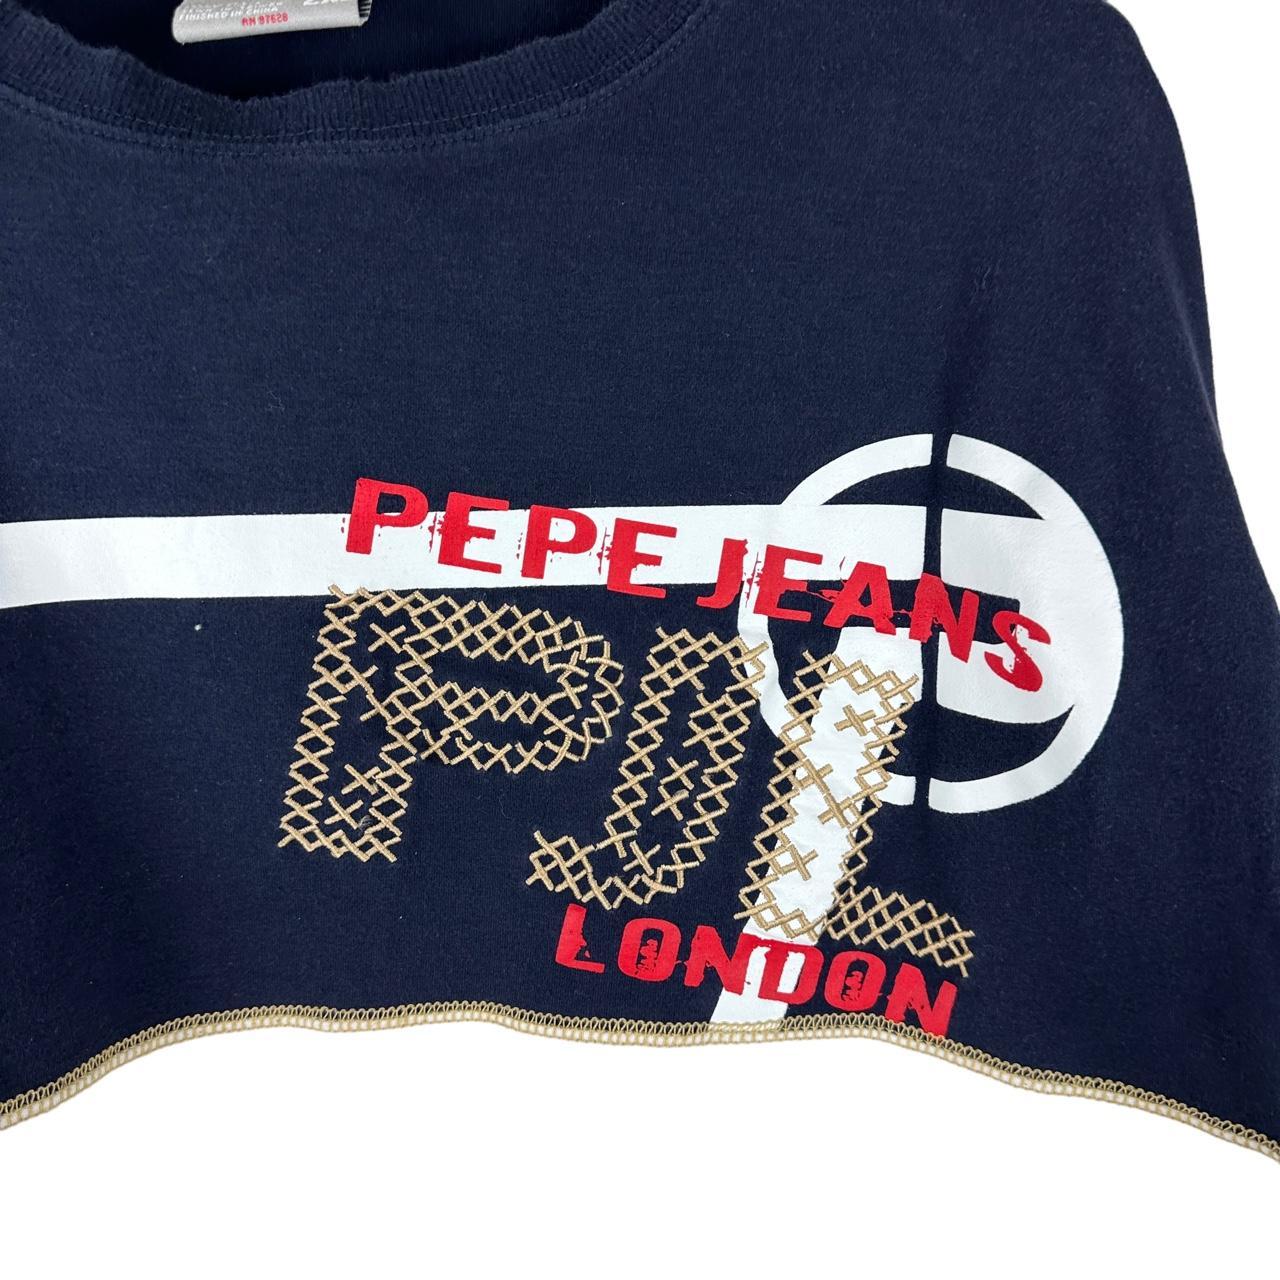 Pepe Jeans Men's T-shirt (2)